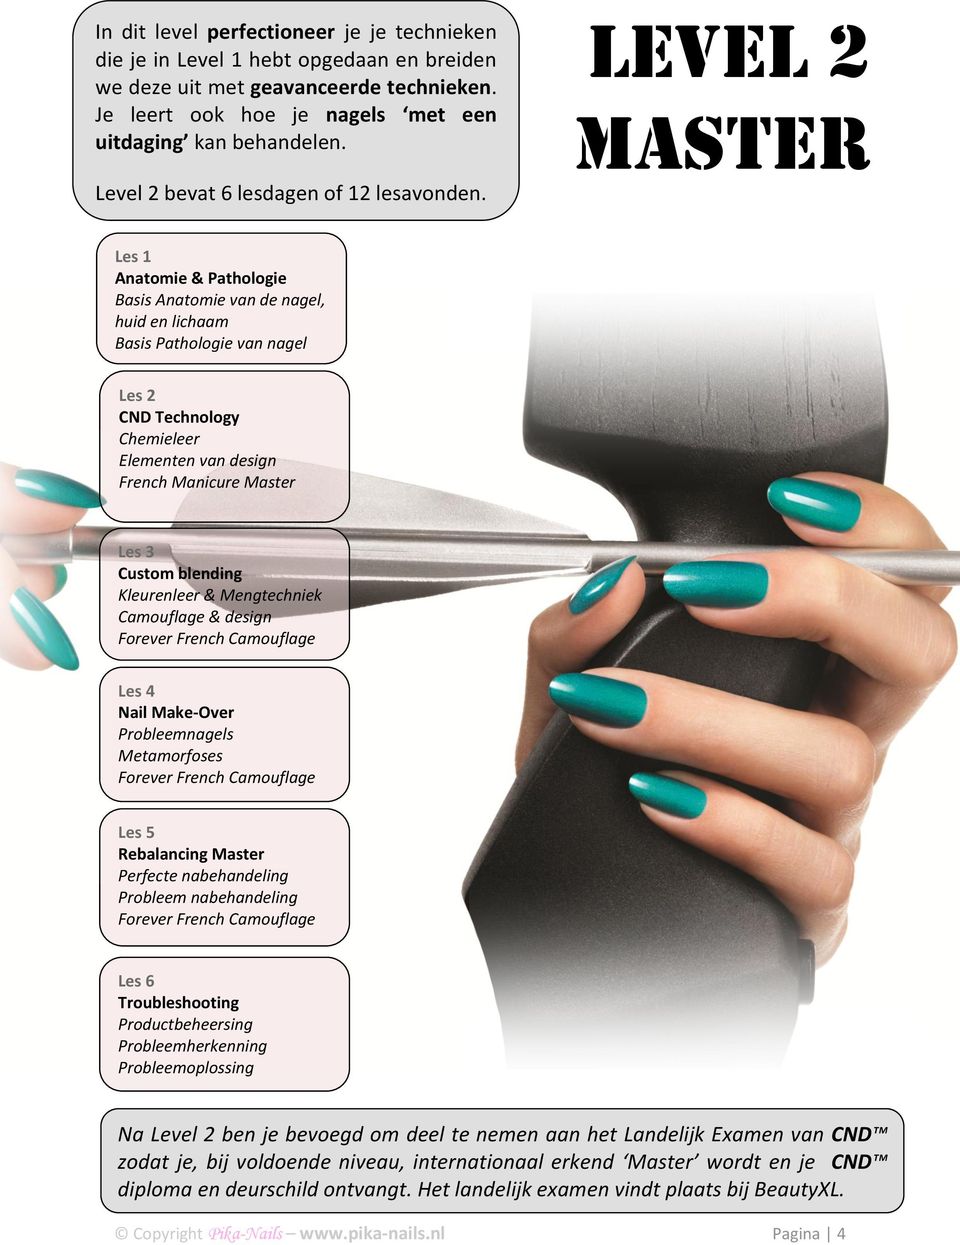 Level 2 Master Les 1 Anatomie & Pathologie Basis Anatomie van de nagel, huid en lichaam Basis Pathologie van nagel Les 2 CND Technology Chemieleer Elementen van design French Manicure Master Les 3